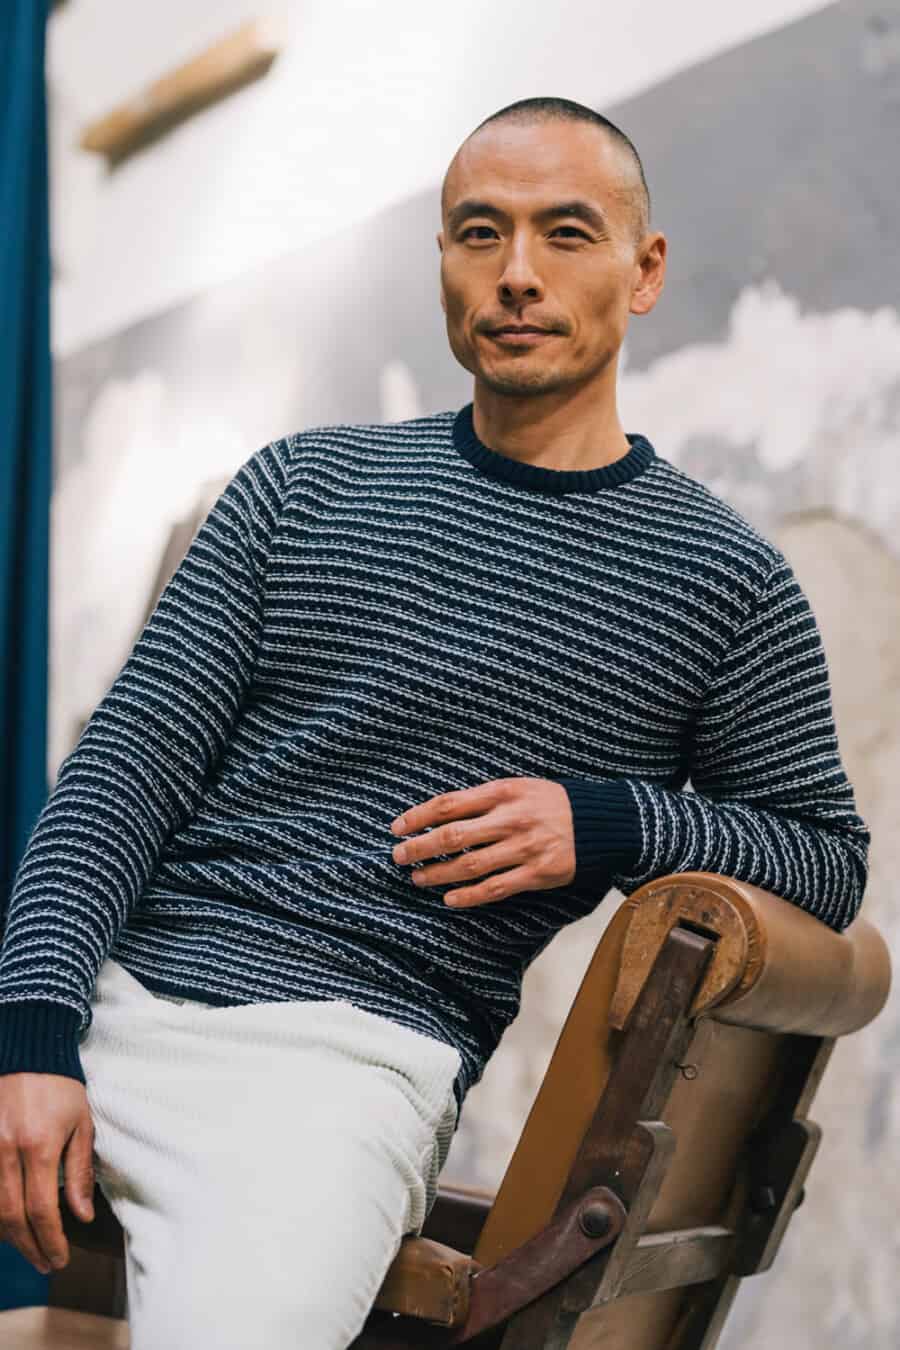 Man wearing white cord pants and blue/white waffle knit sweater